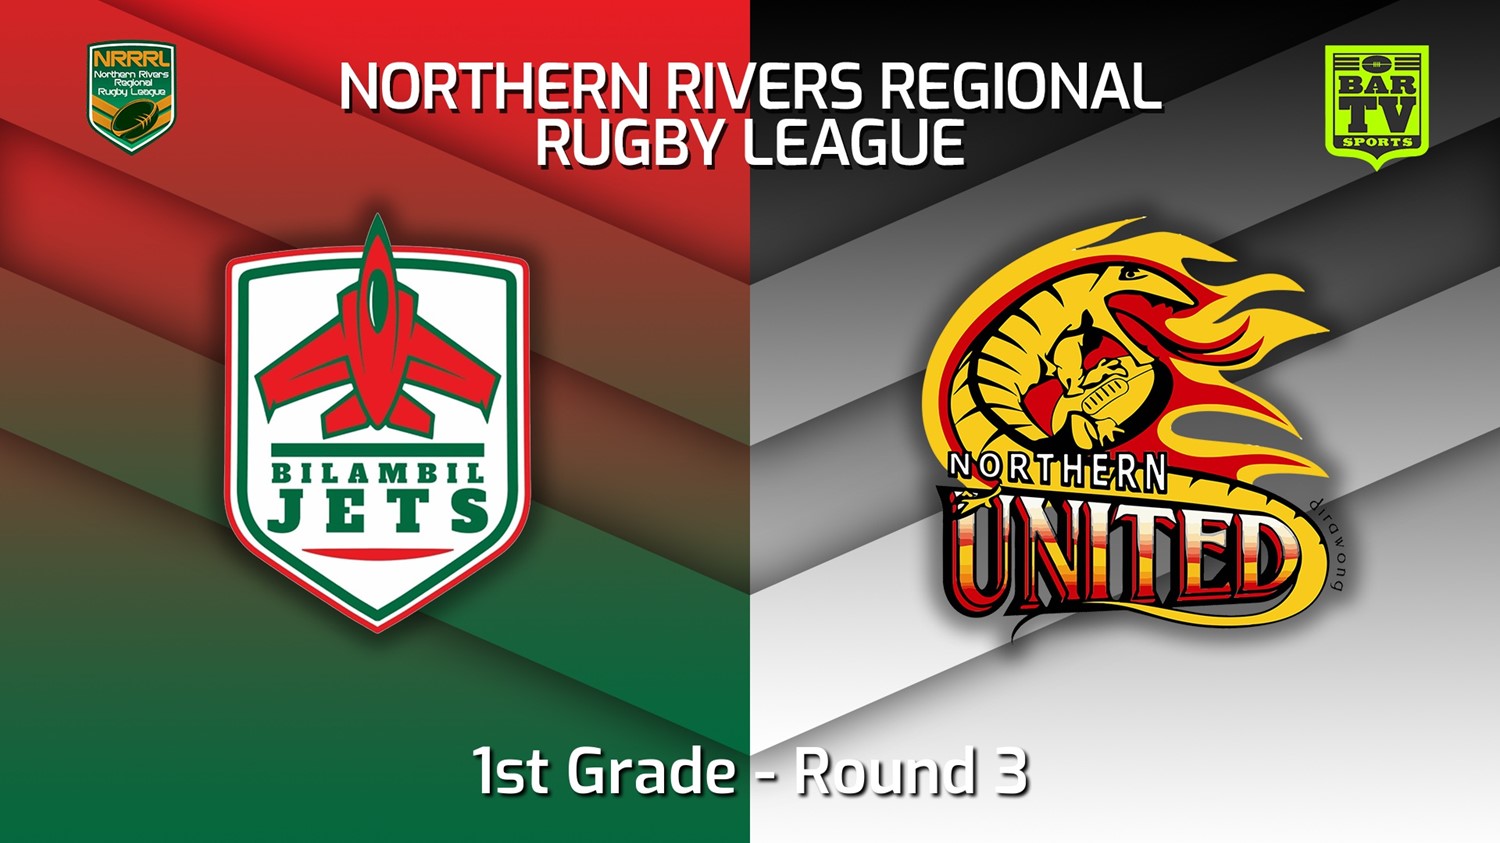 220508-Northern Rivers Round 3 - 1st Grade - Bilambil Jets v Northern United Slate Image